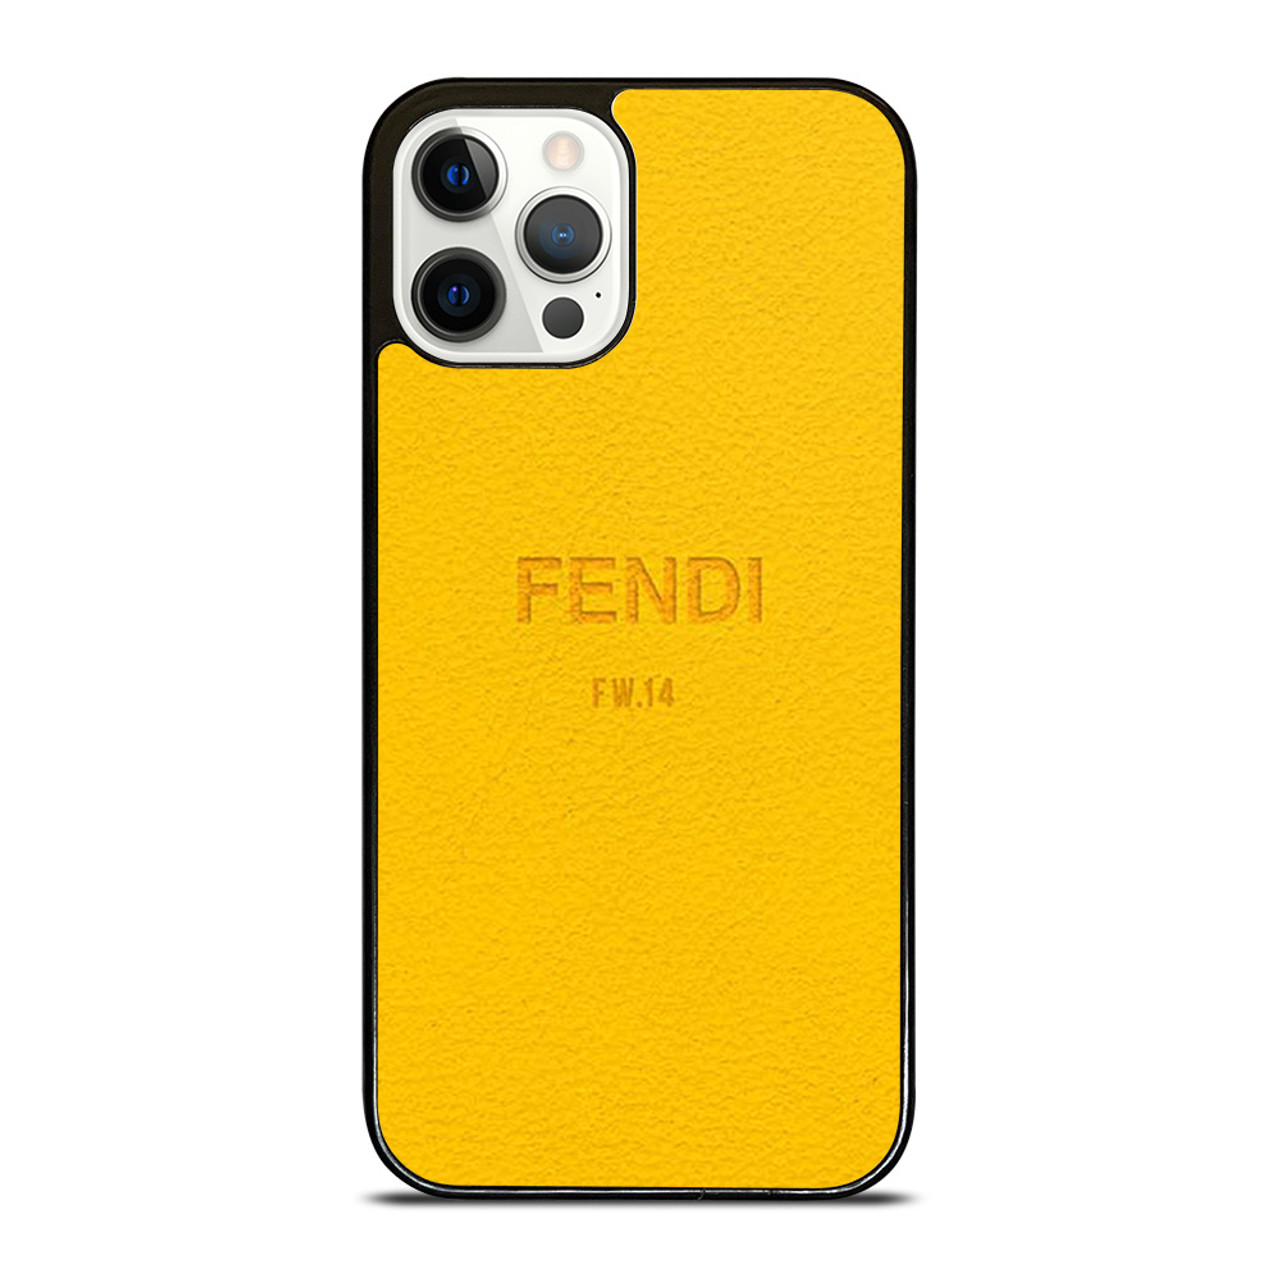 FENDI YELLOW iPhone Pro Case Cover